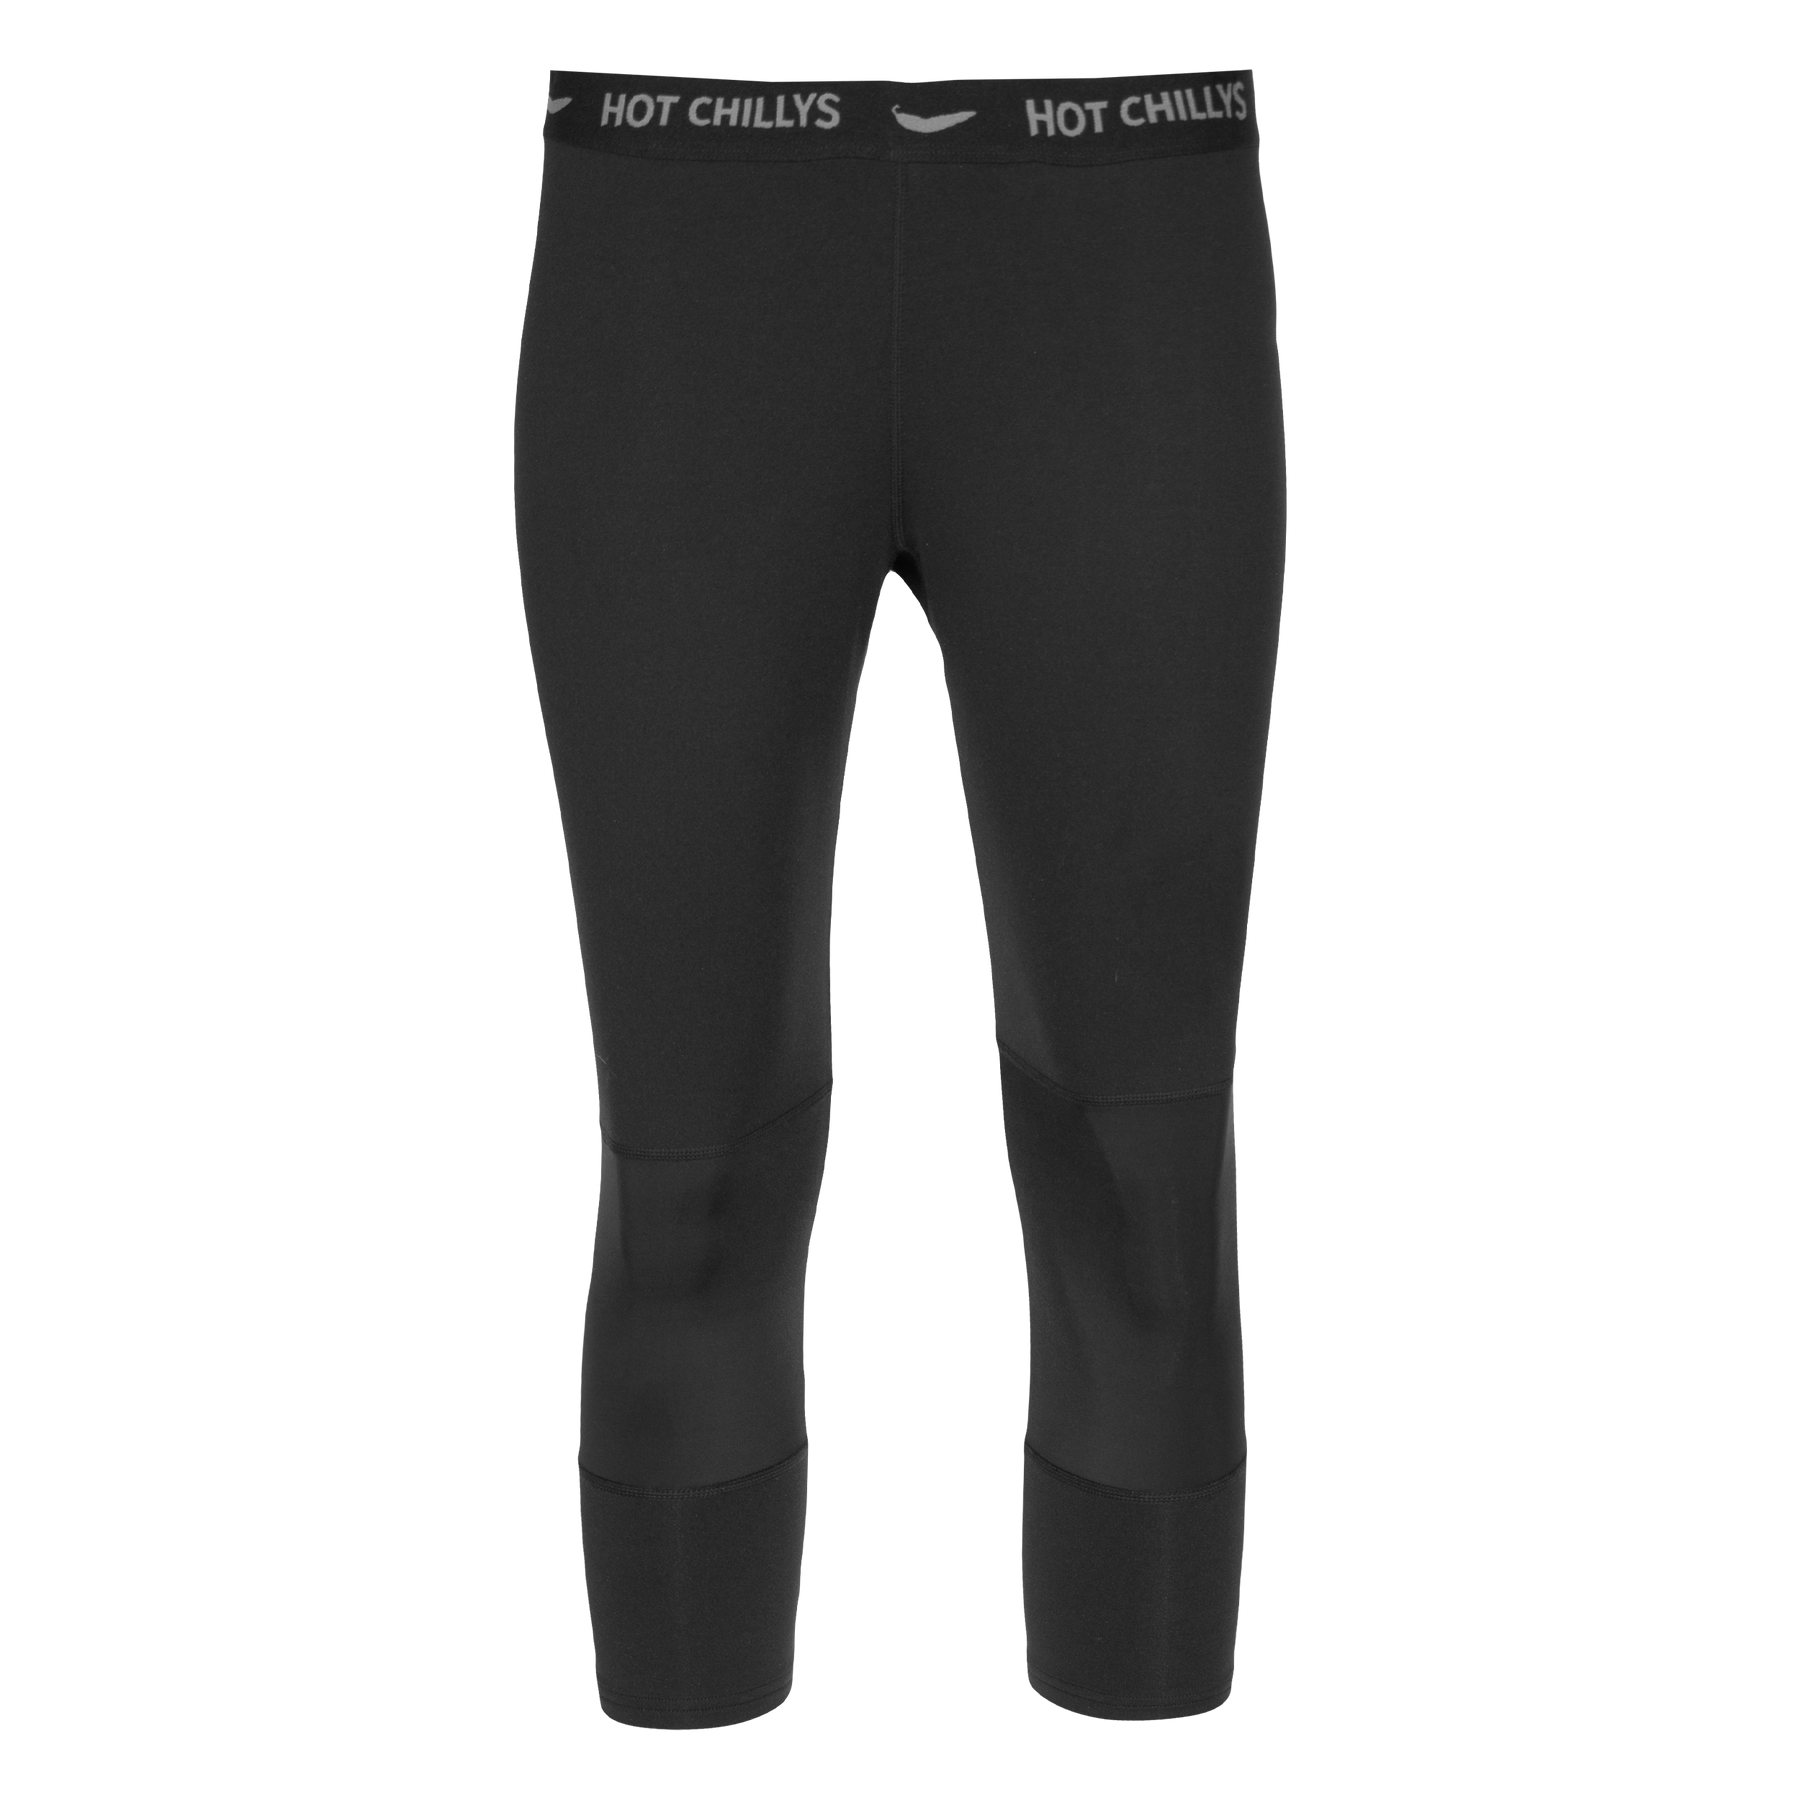 Elite Men's Sweatpants - Solid Black – Elite Sports USA